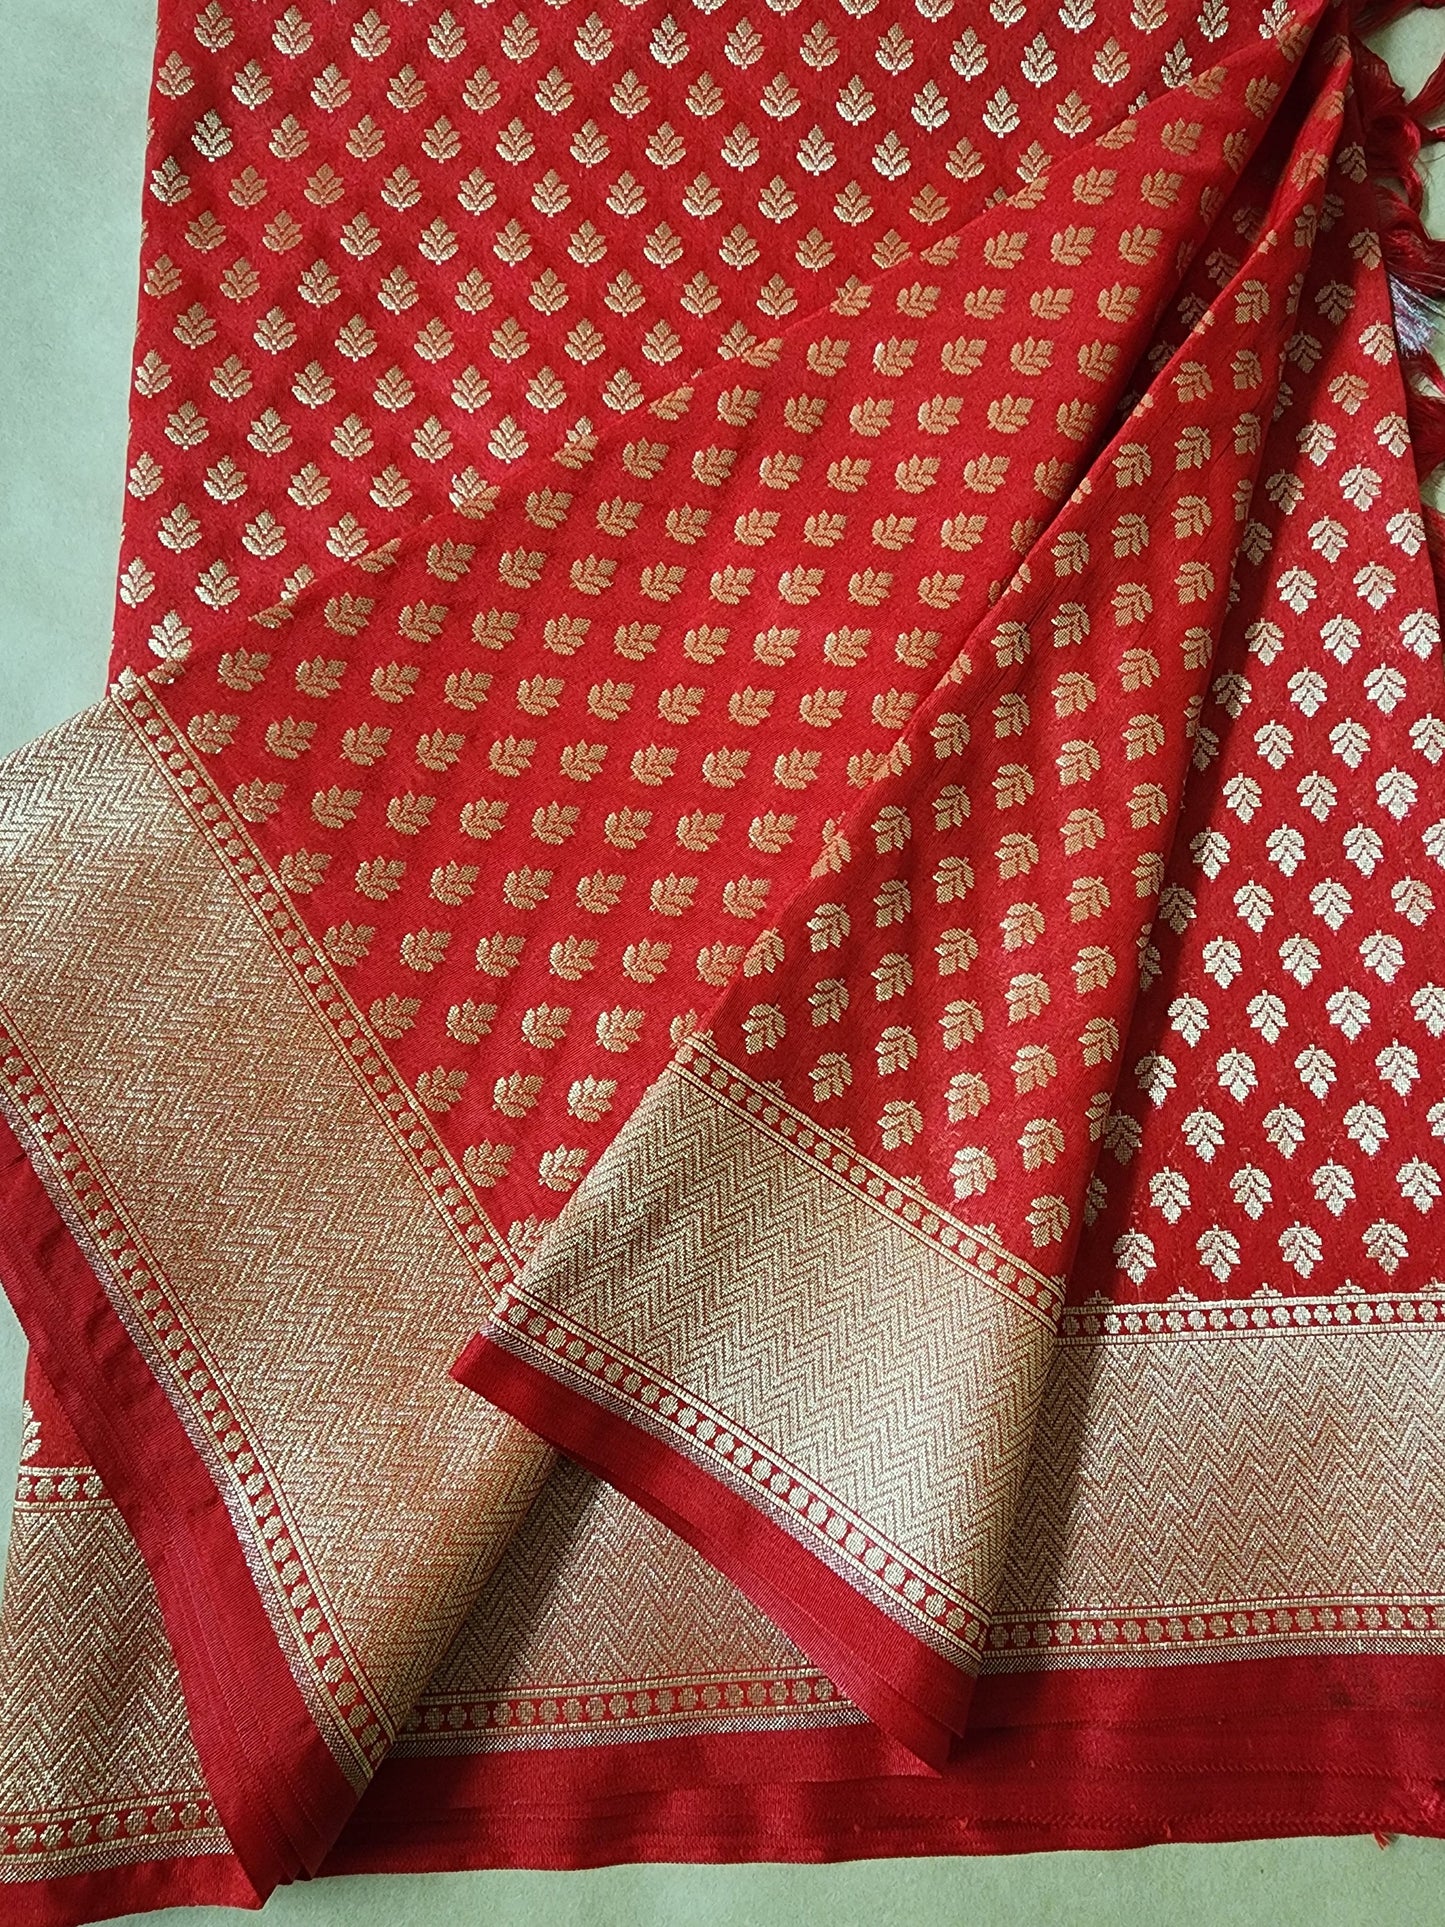 Banarasi Silk Red Color Dupatta with gold handweaving, Indian traditional and Festive designer dupatta, luxurious and soft Banarsi dupatta